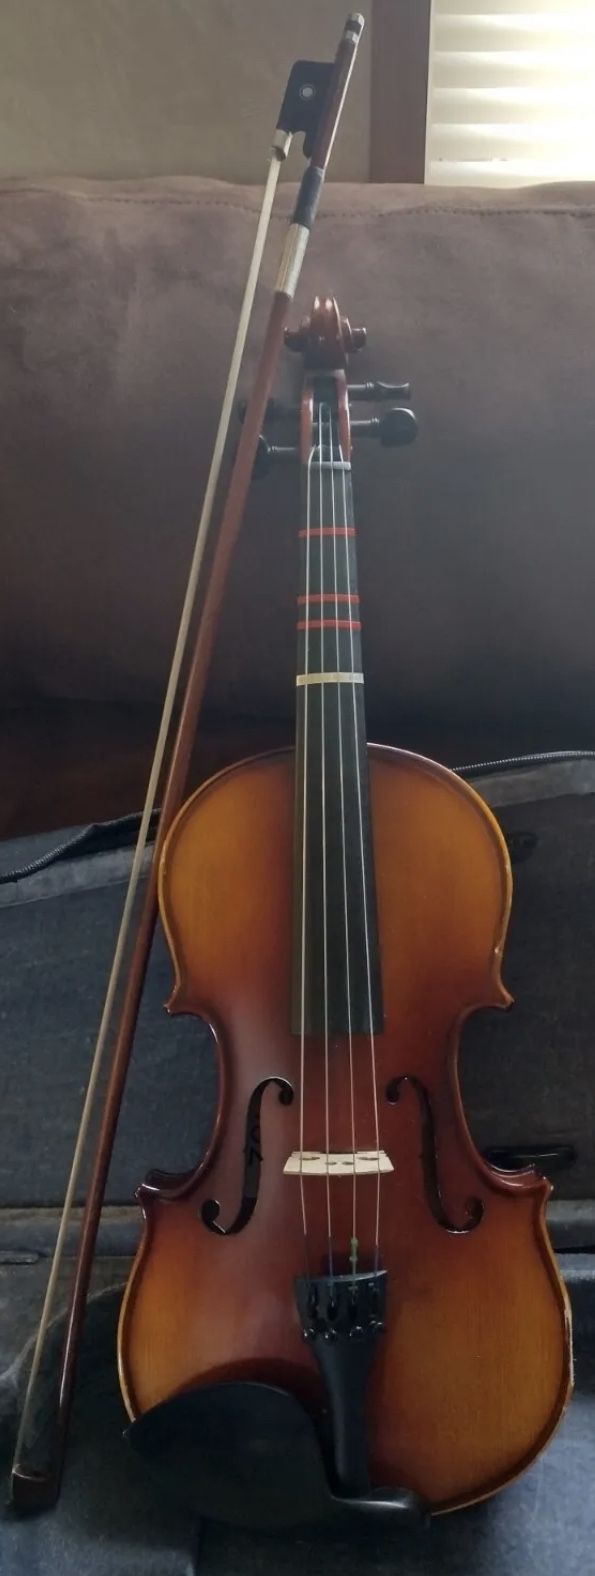 Probus Violins